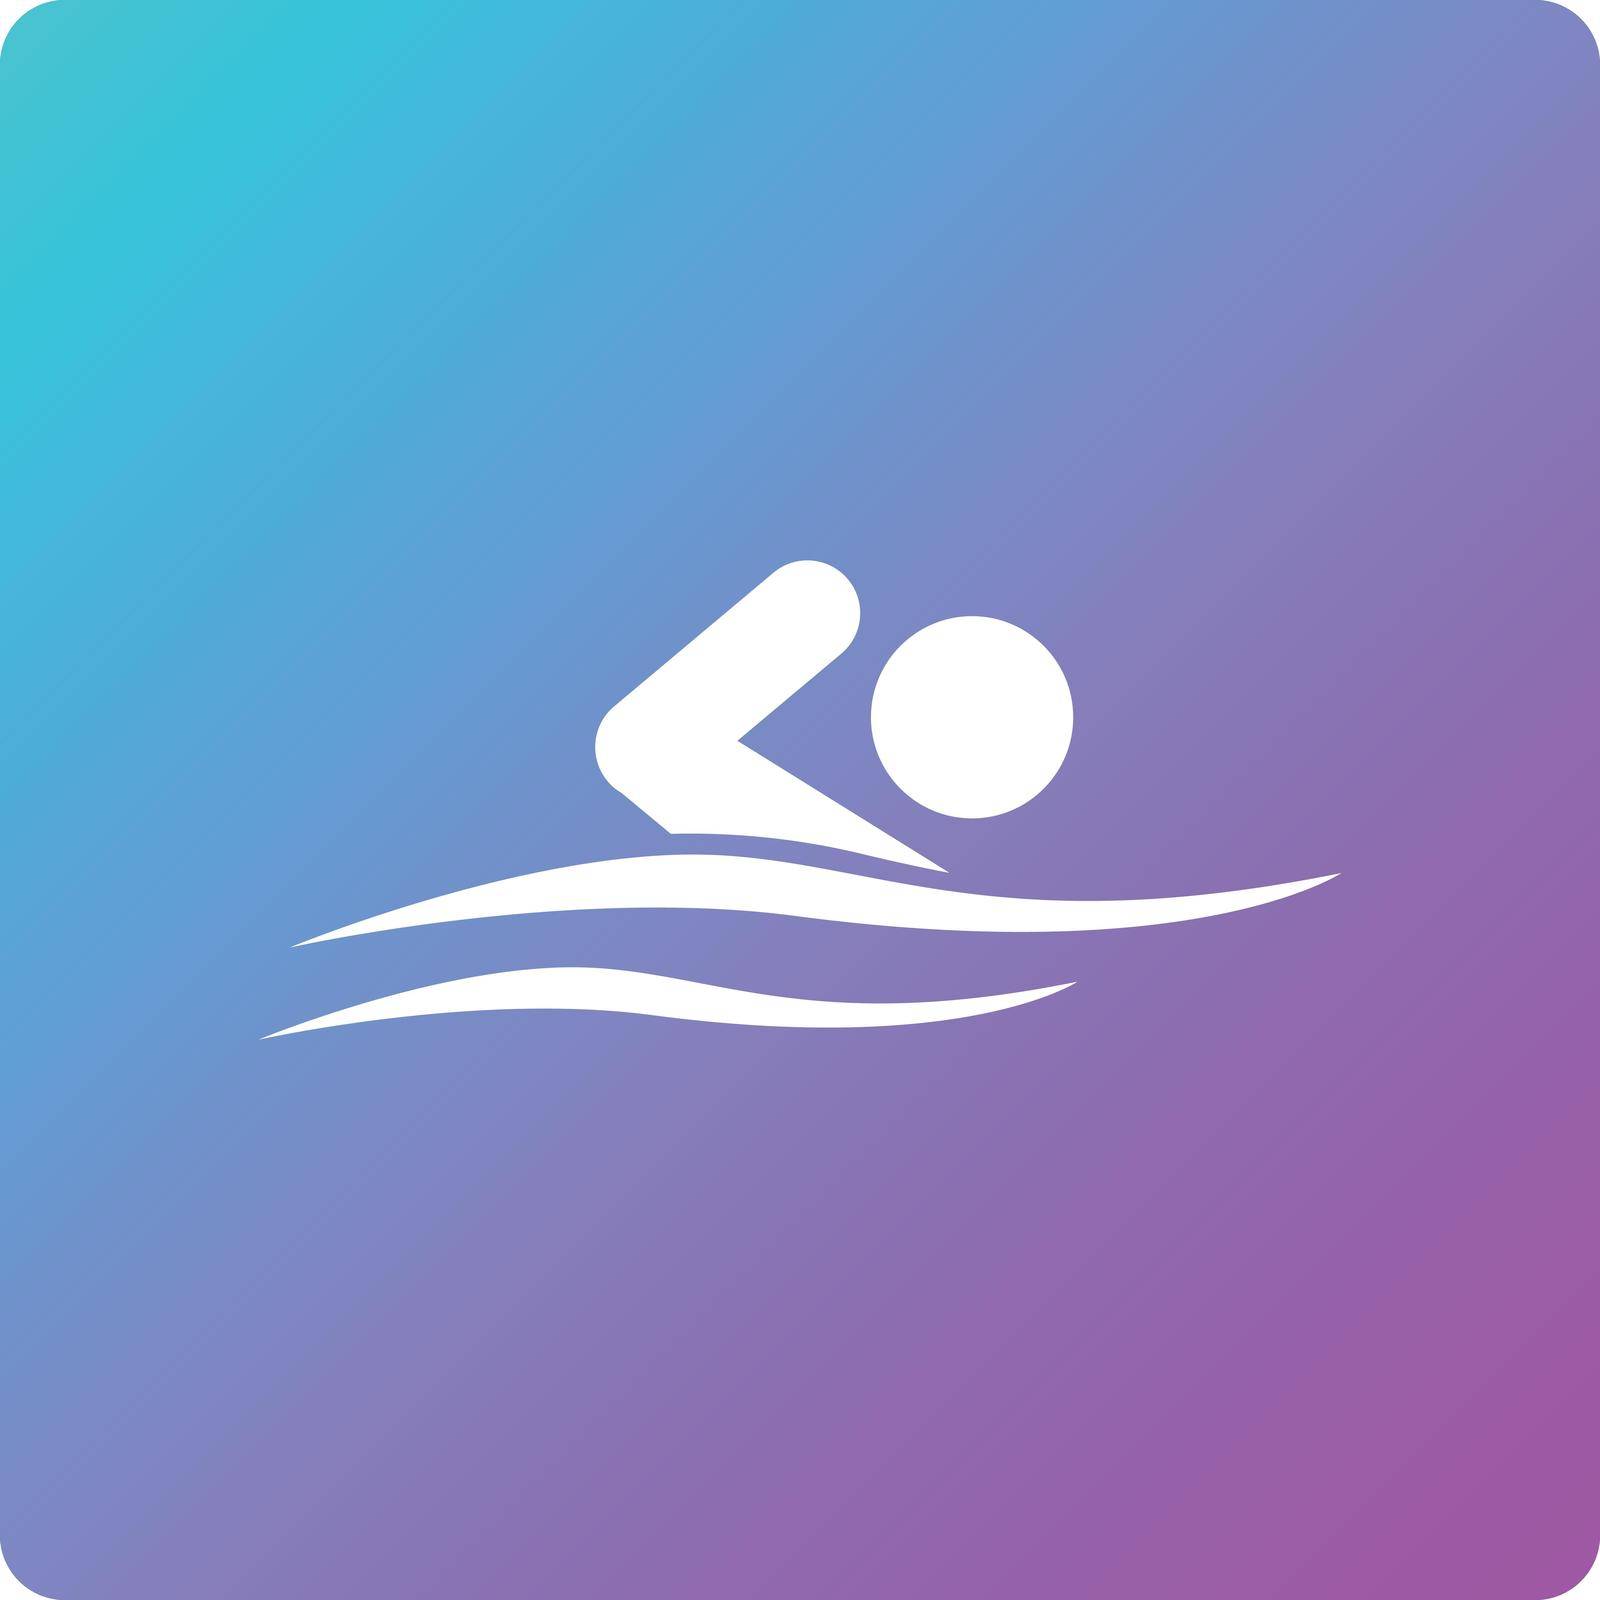 swimmer vector icon. swimmer single web icon on trendy gradient